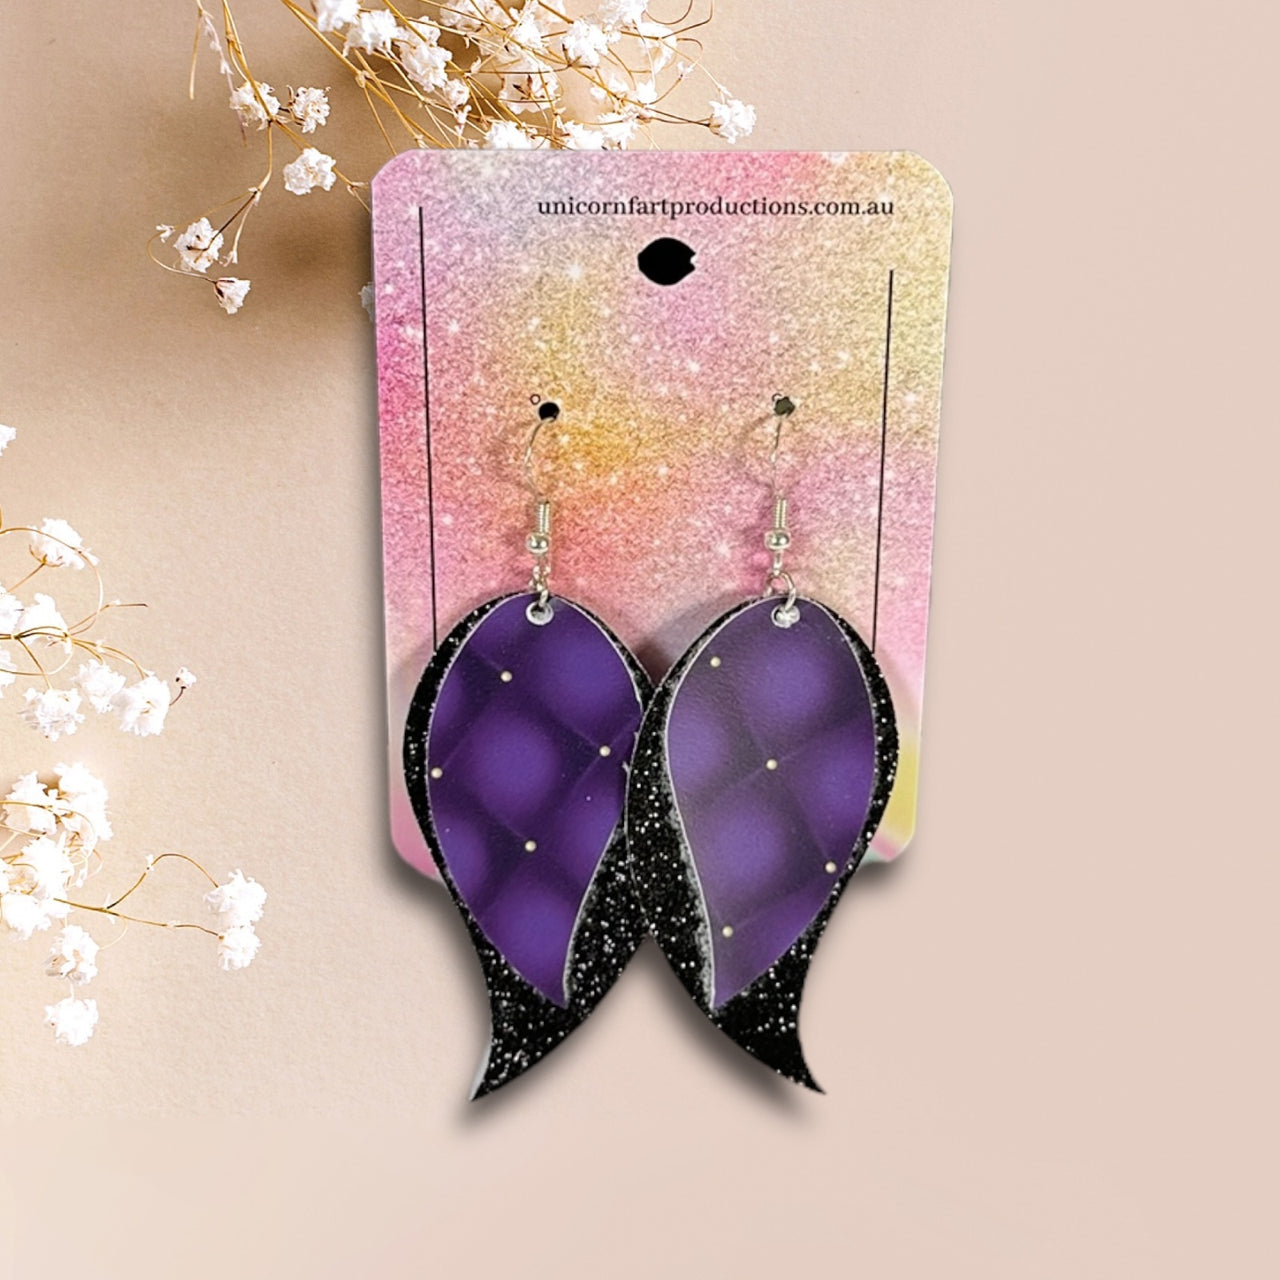 Handmade faux leather earrings - Black Sparkles 2 Leaves